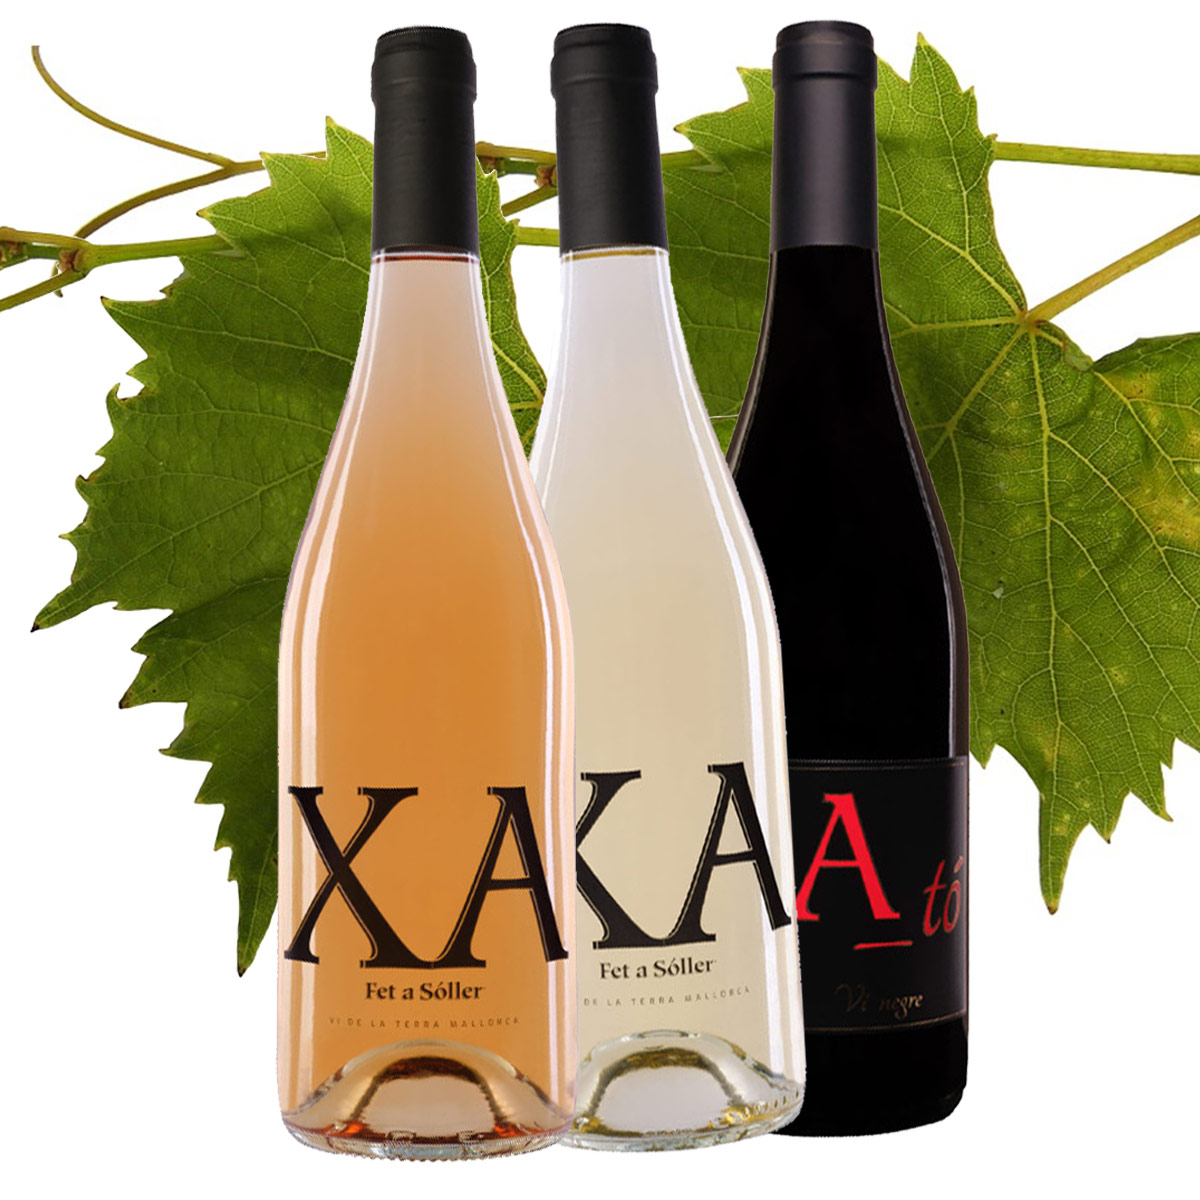 Our house wines XA and XA tó